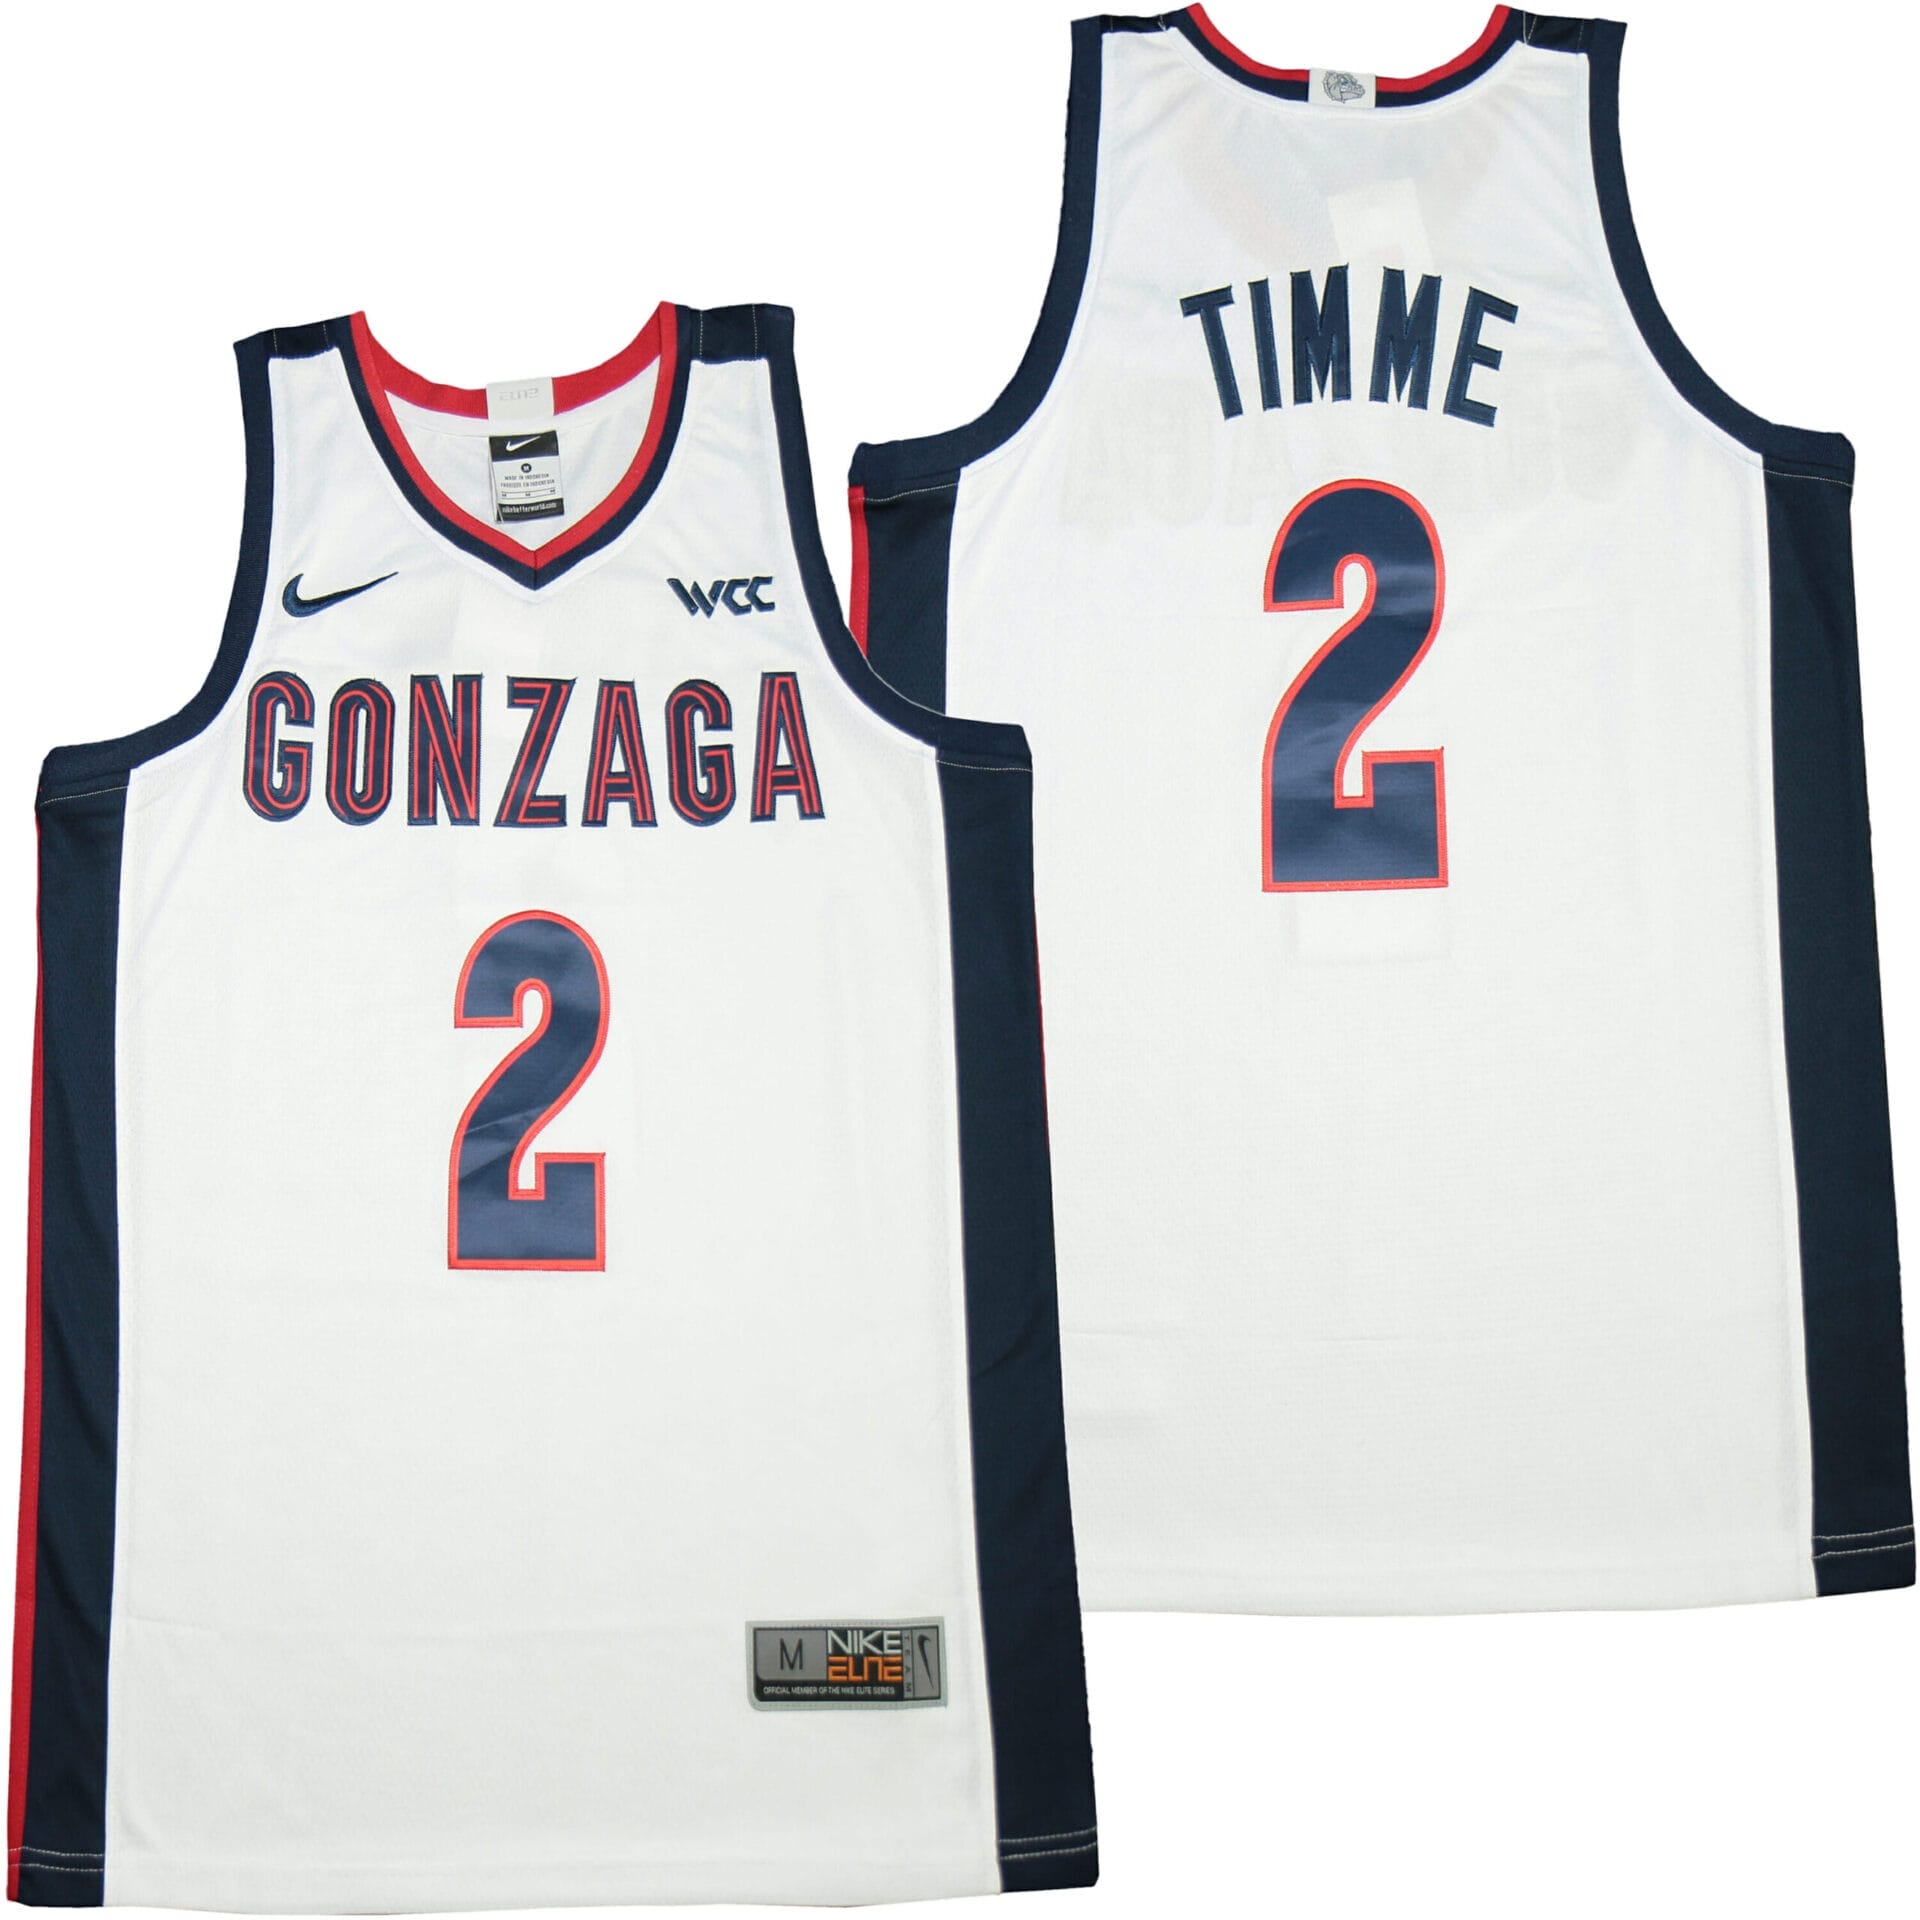 Gonzaga Bulldogs NCAA Jerseys for sale